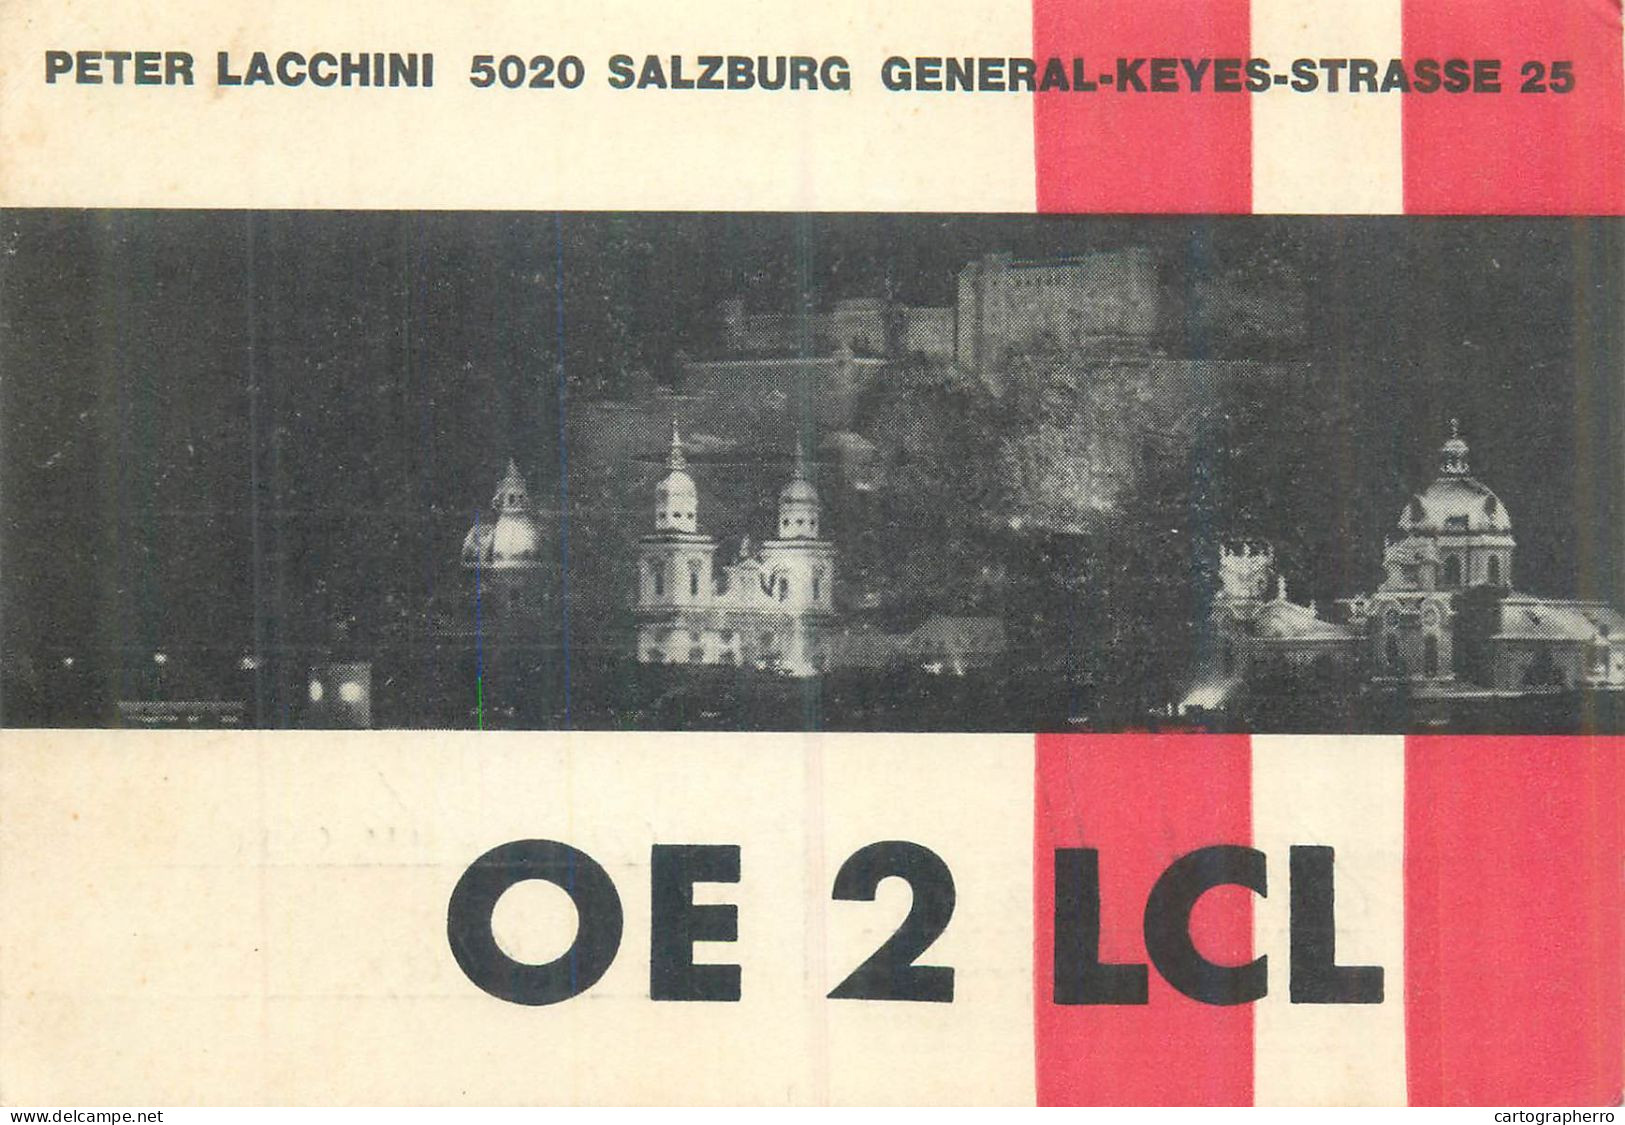 Radio Amateur QSL Card To YO5-3553 From Austria Salzburg OE2LCL - Radio Amateur